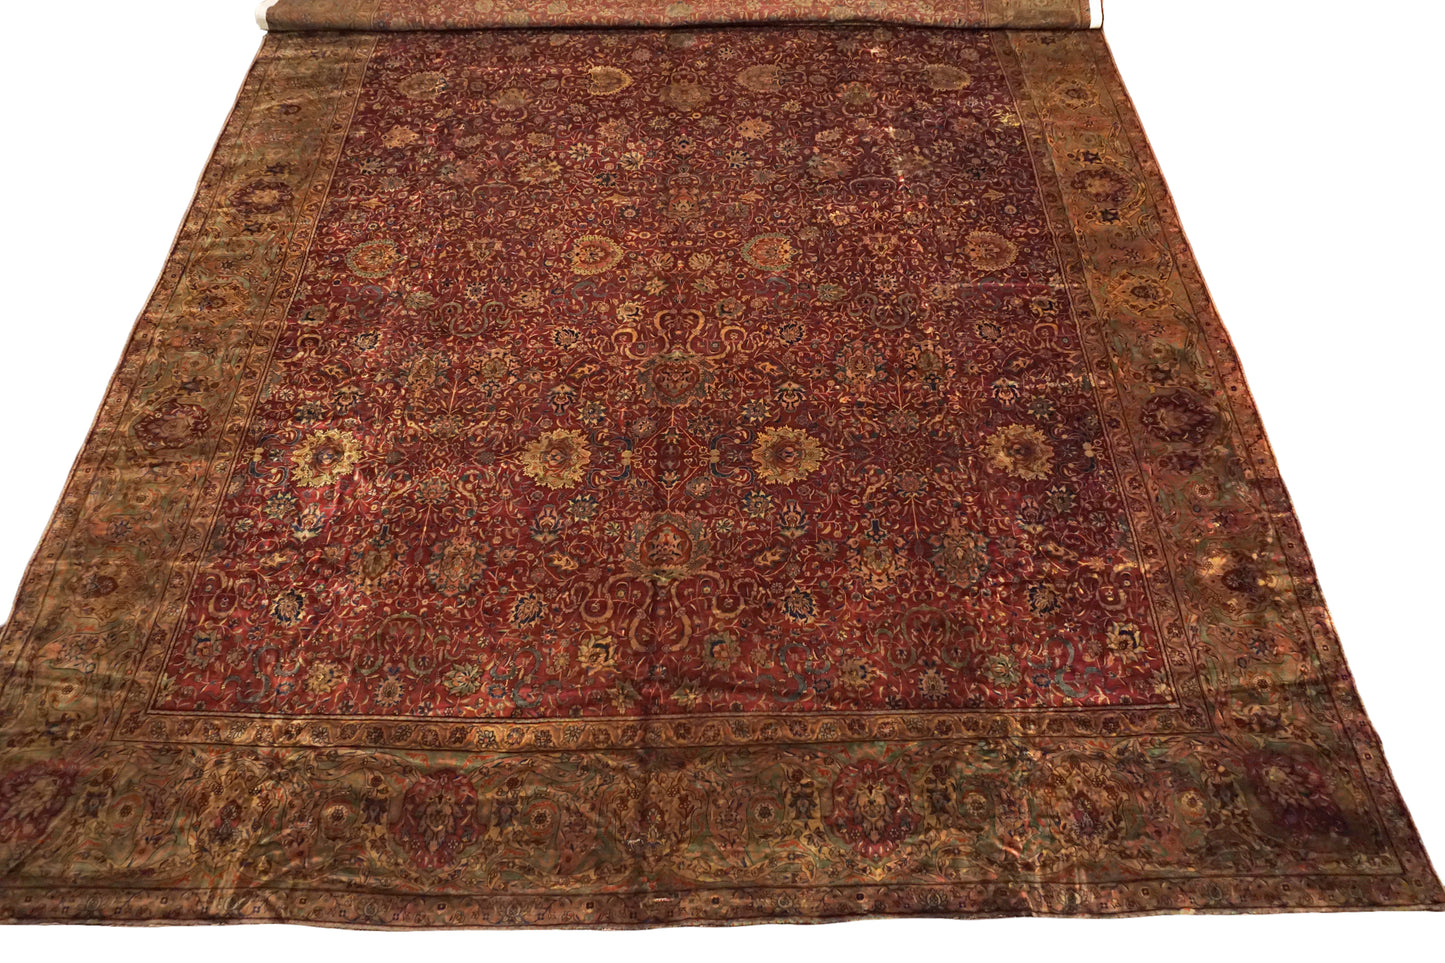 18X24 Burgundy Antique Indian Wool Rug, circa 1900